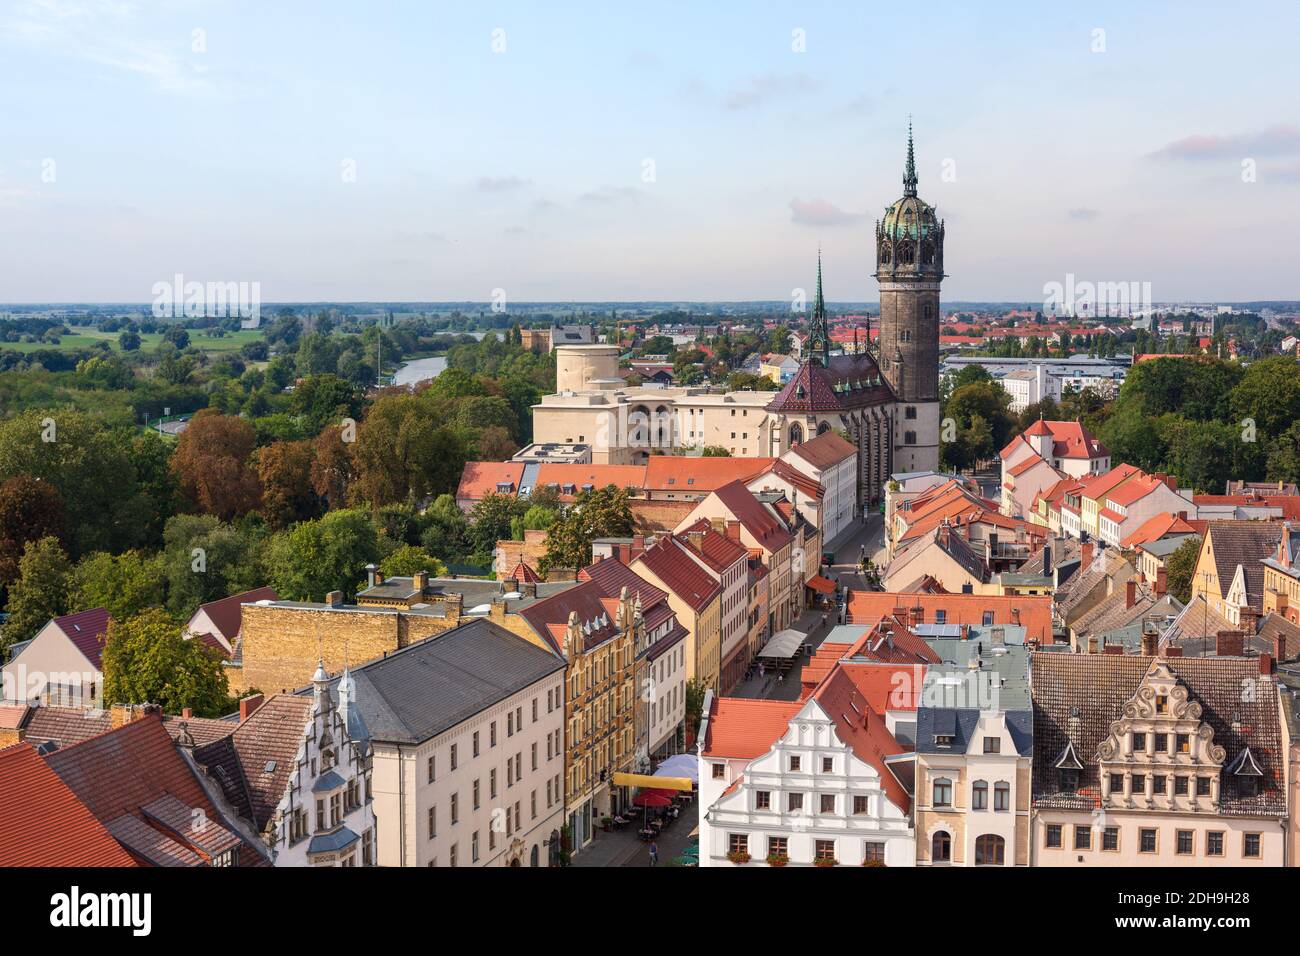 Vista aérea del centro histórico de la ciudad de Wittenberg con La Iglesia del Castillo Foto de stock